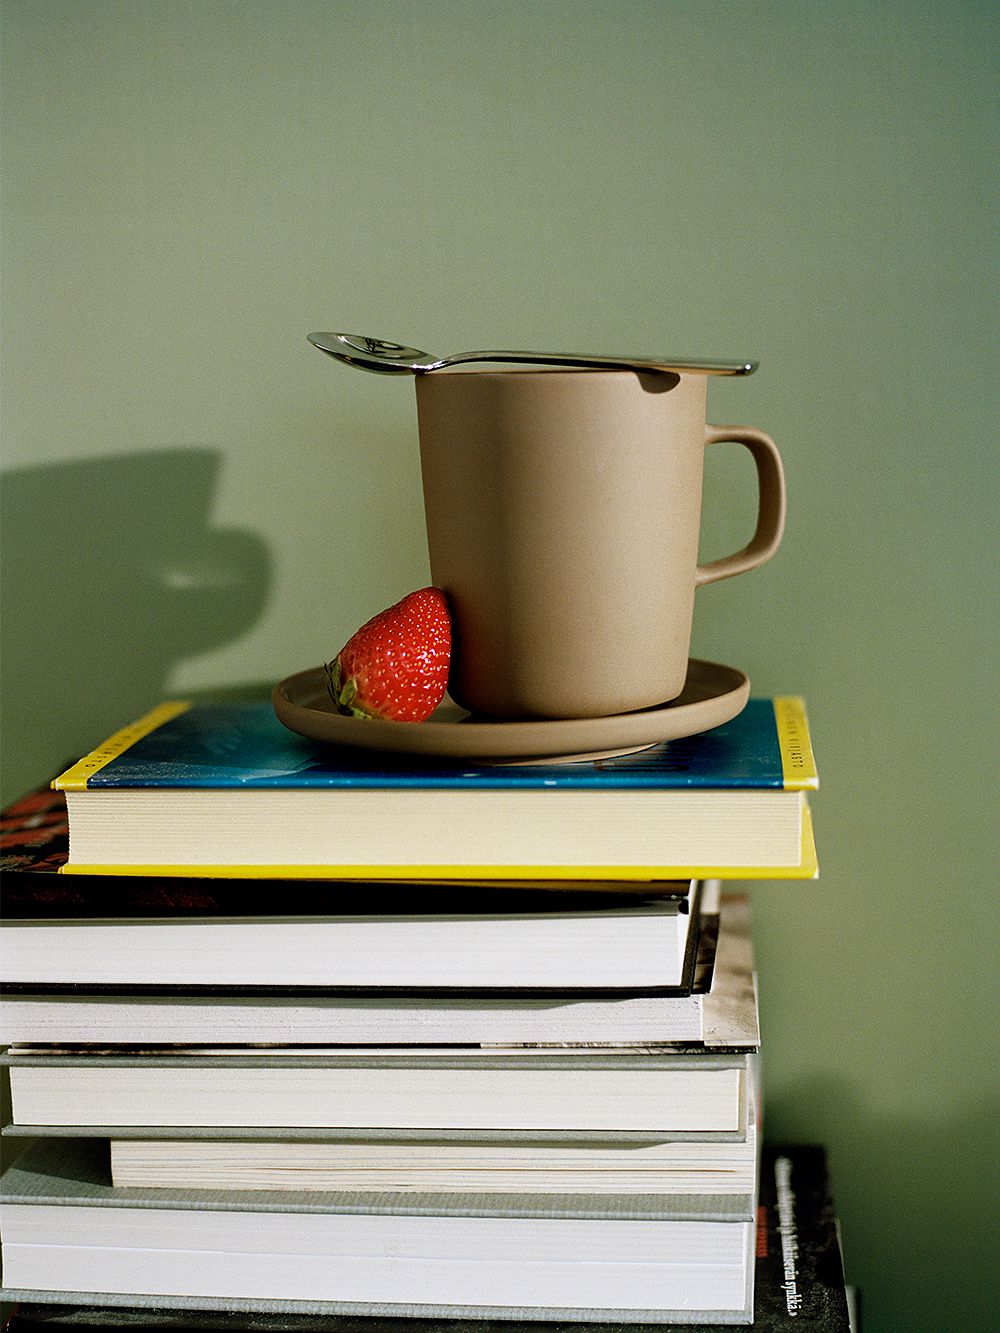 Marimekko's Oiva mug placed on a stack of books.